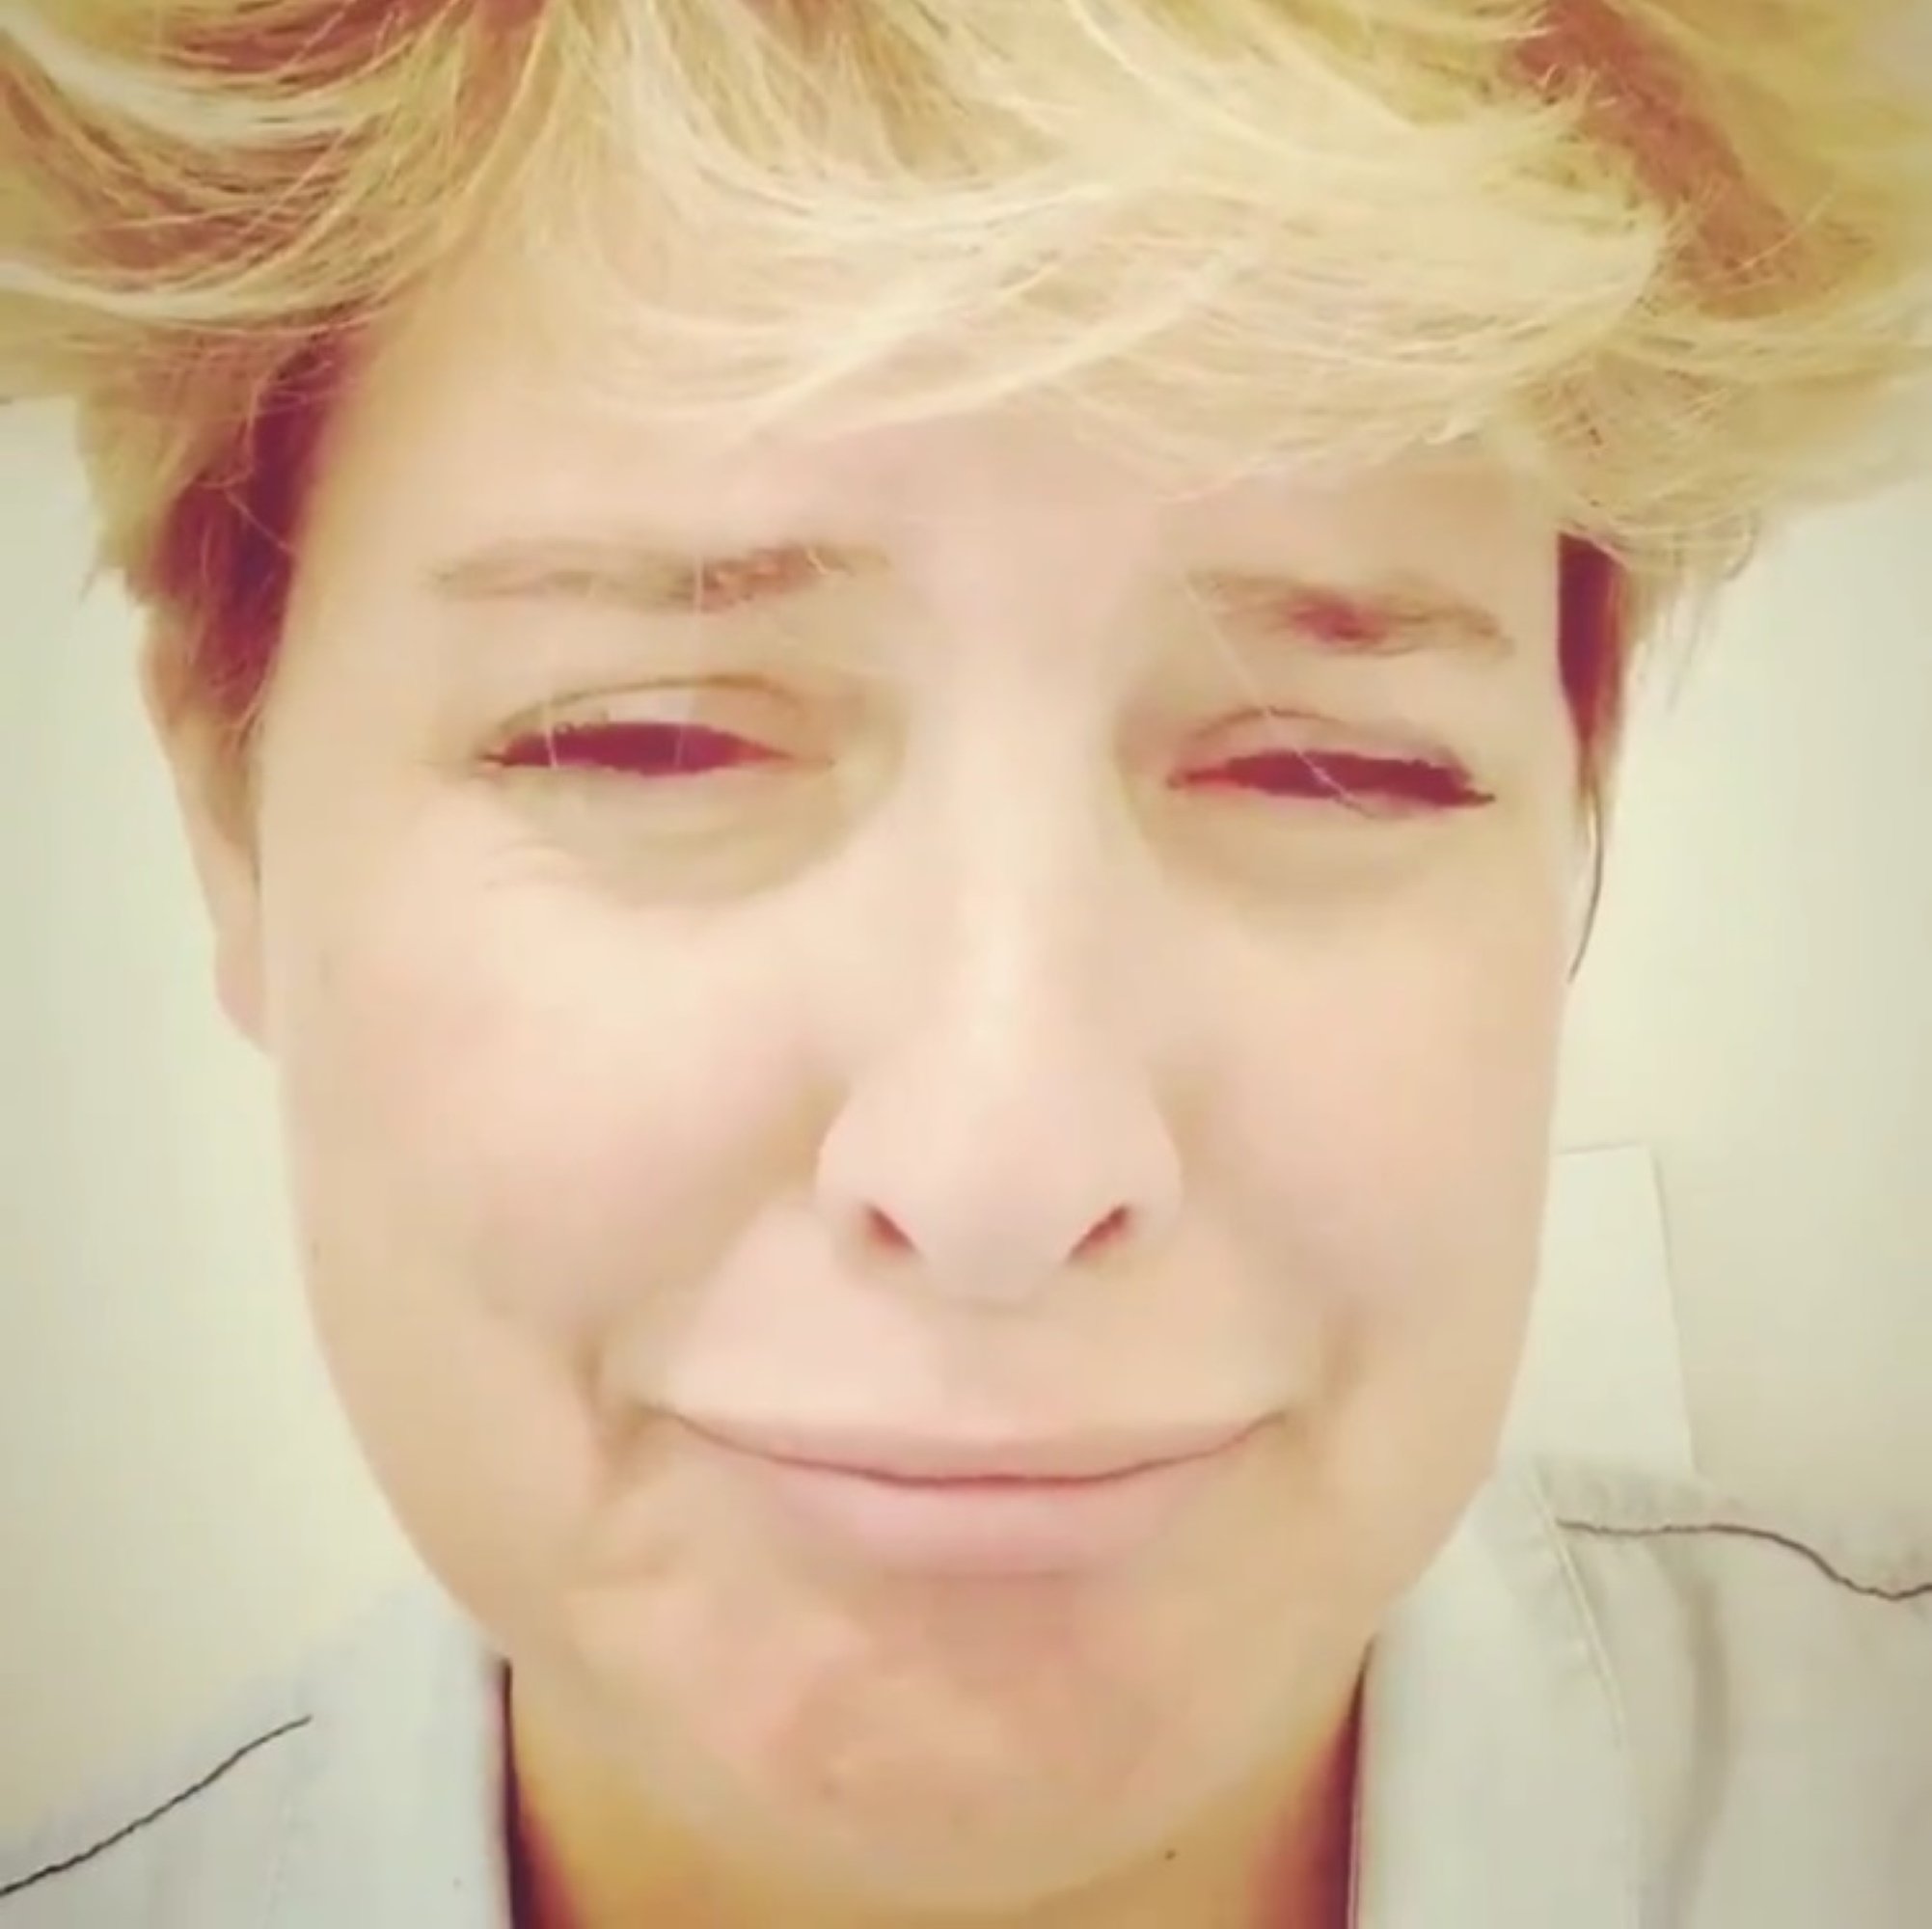 Tania Llasera plora desconsolada a Instagram: “La vida es así”